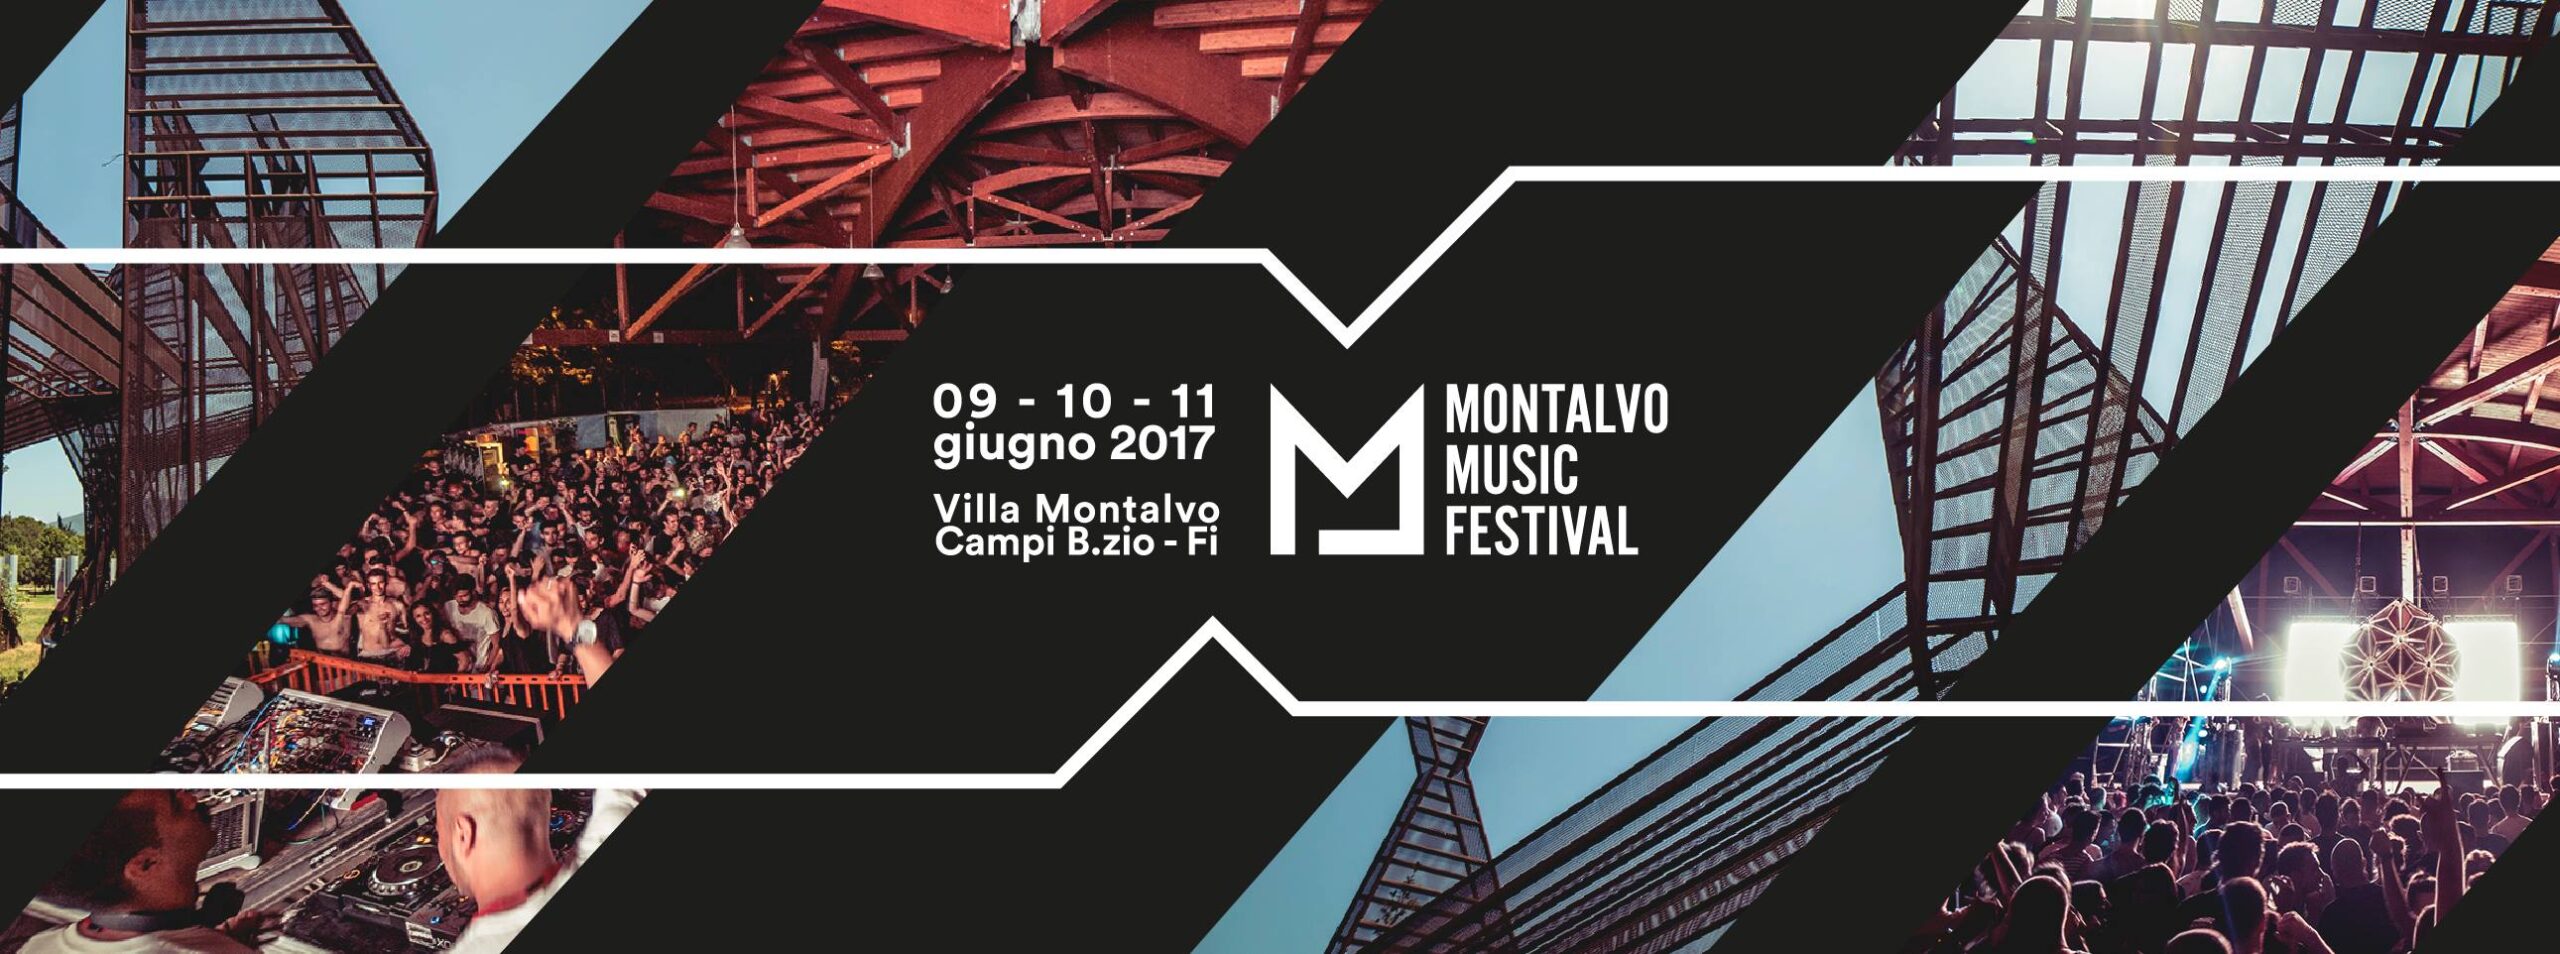 Montalvo Music Festival 2017 Firenze